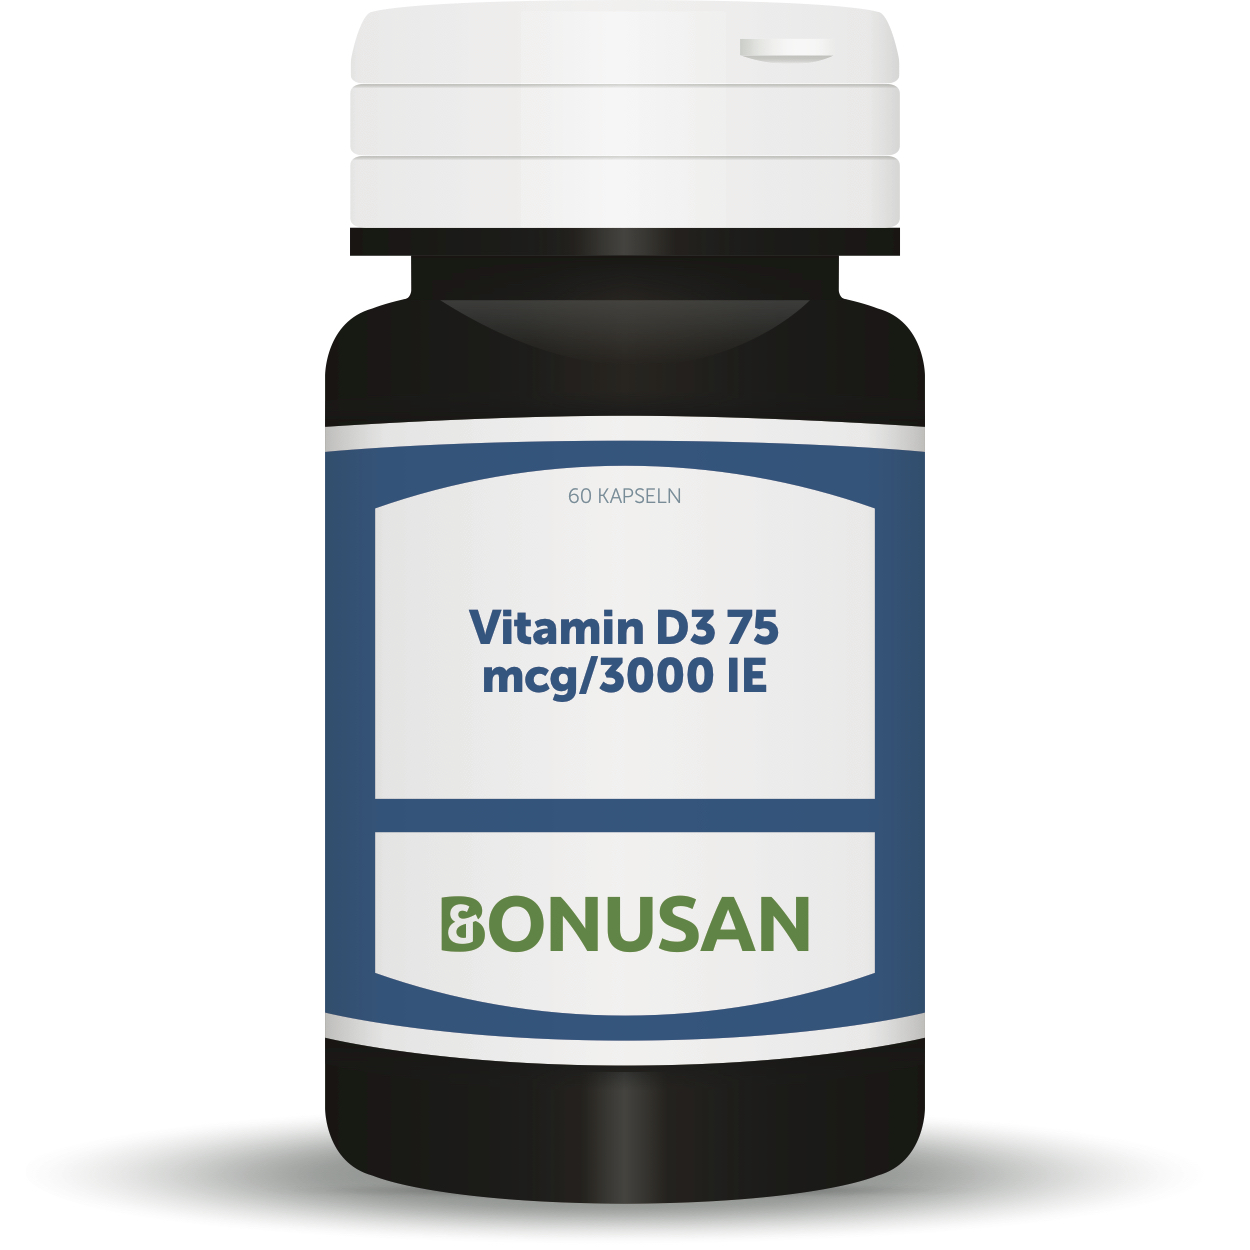 Bonusan „ Vitamin D3 75mcg/3000 IE“ - 60 Kapseln 